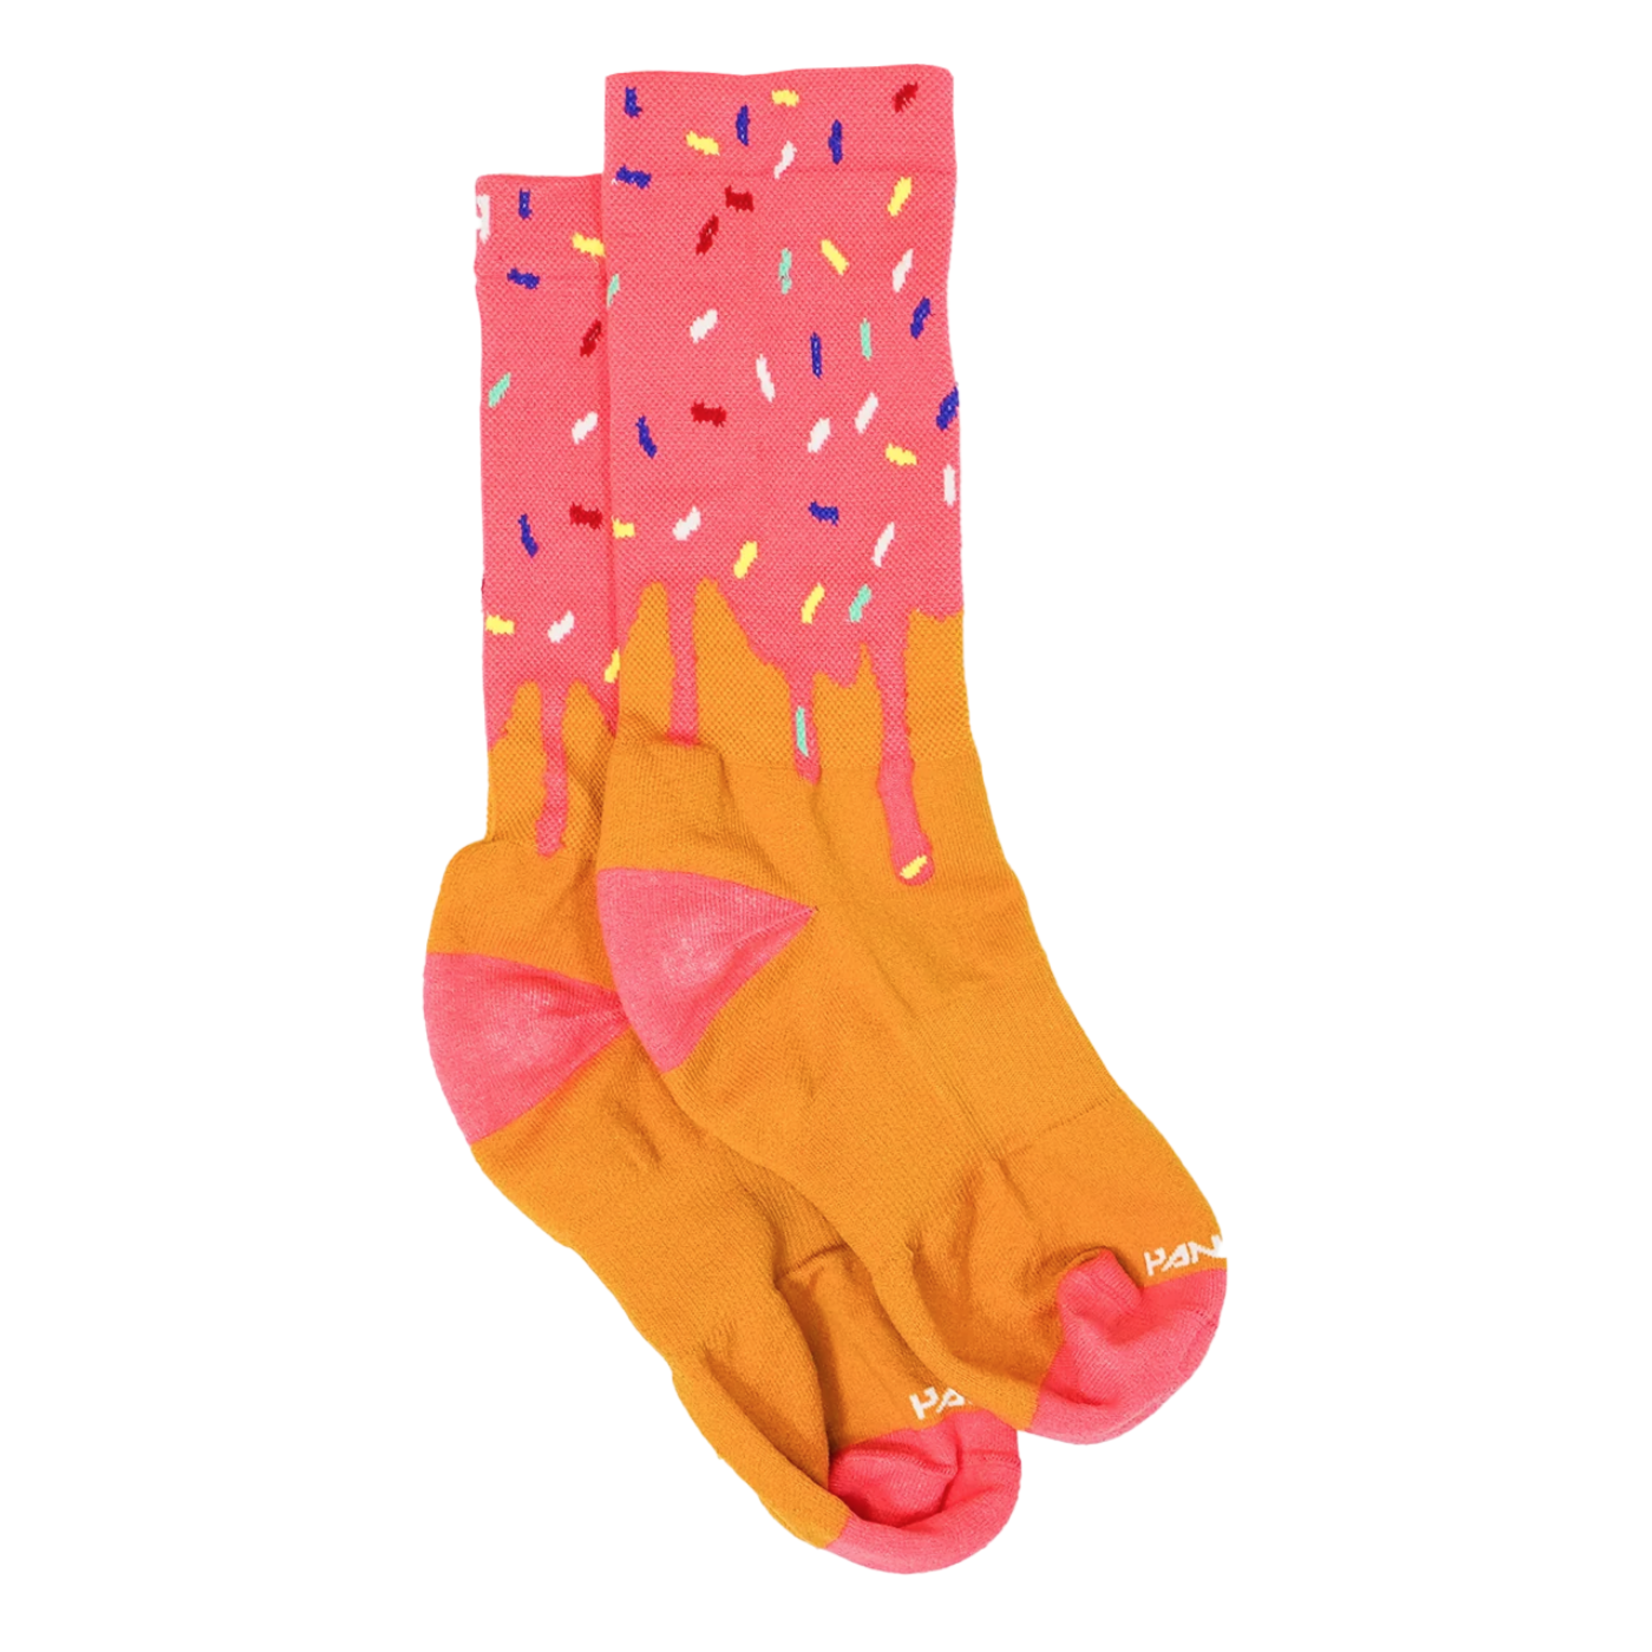 Handup Sock - HandUp